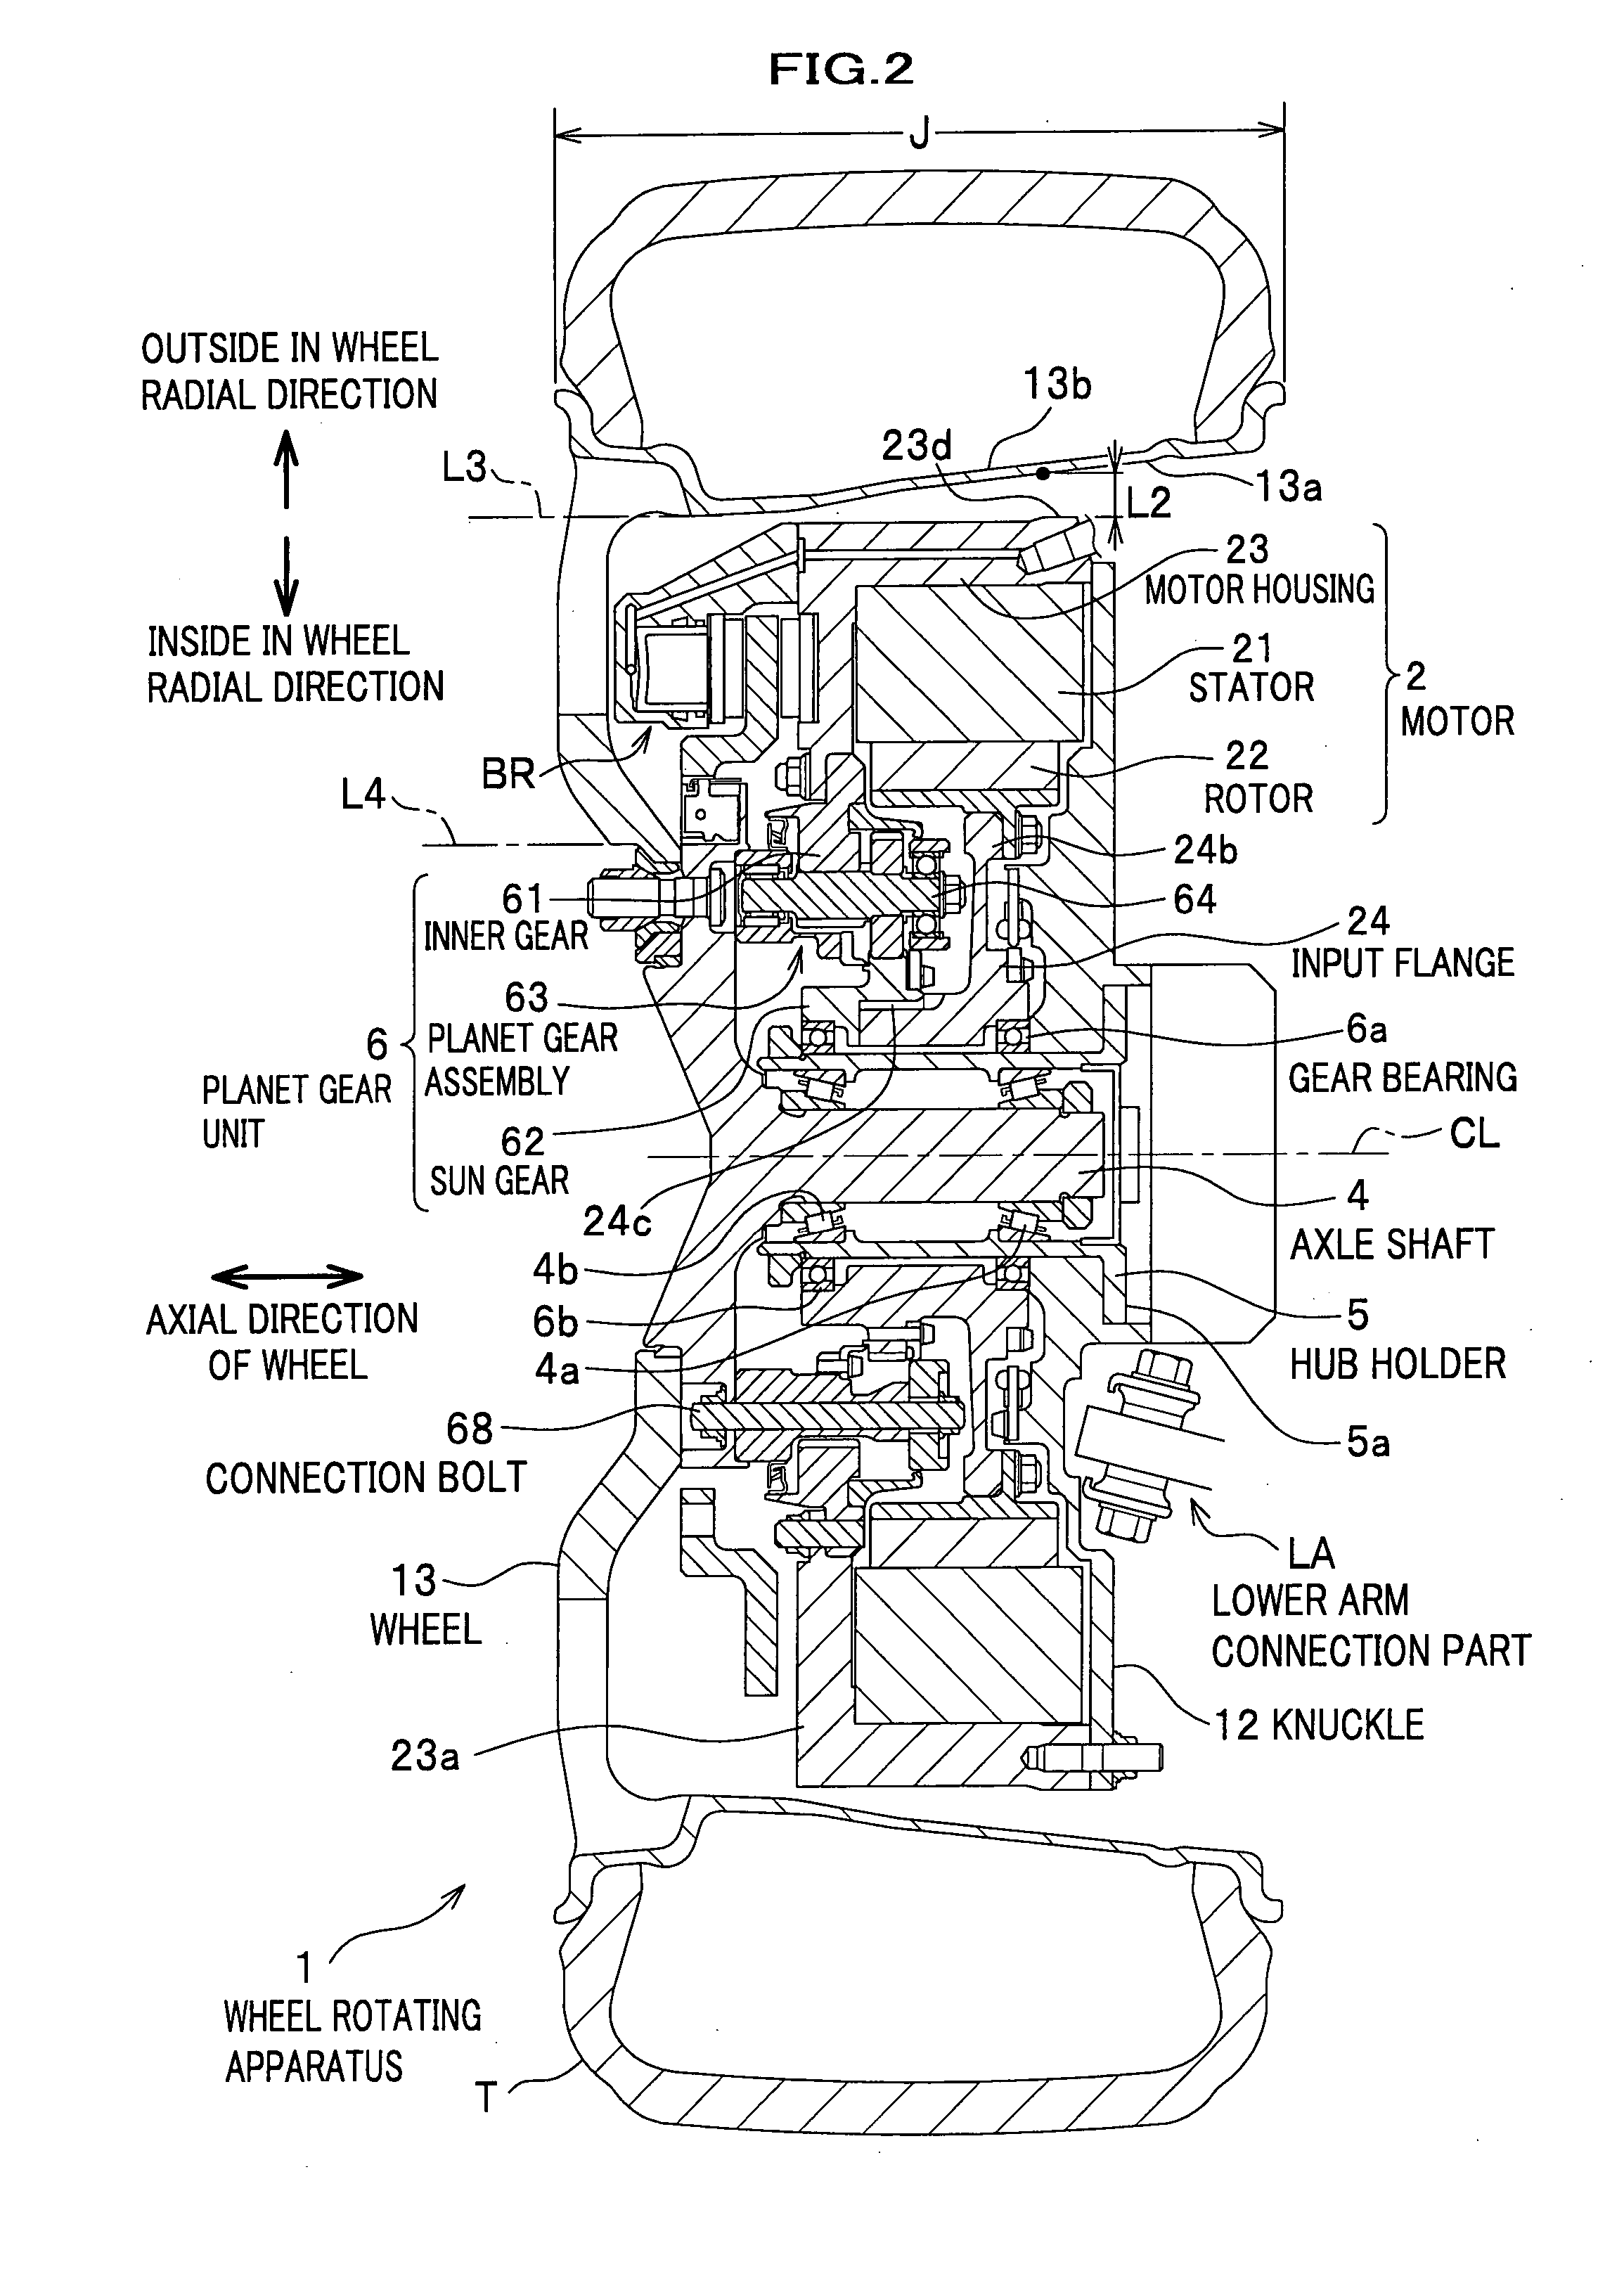 Wheel rotating apparatus and in-wheel motor vehicle